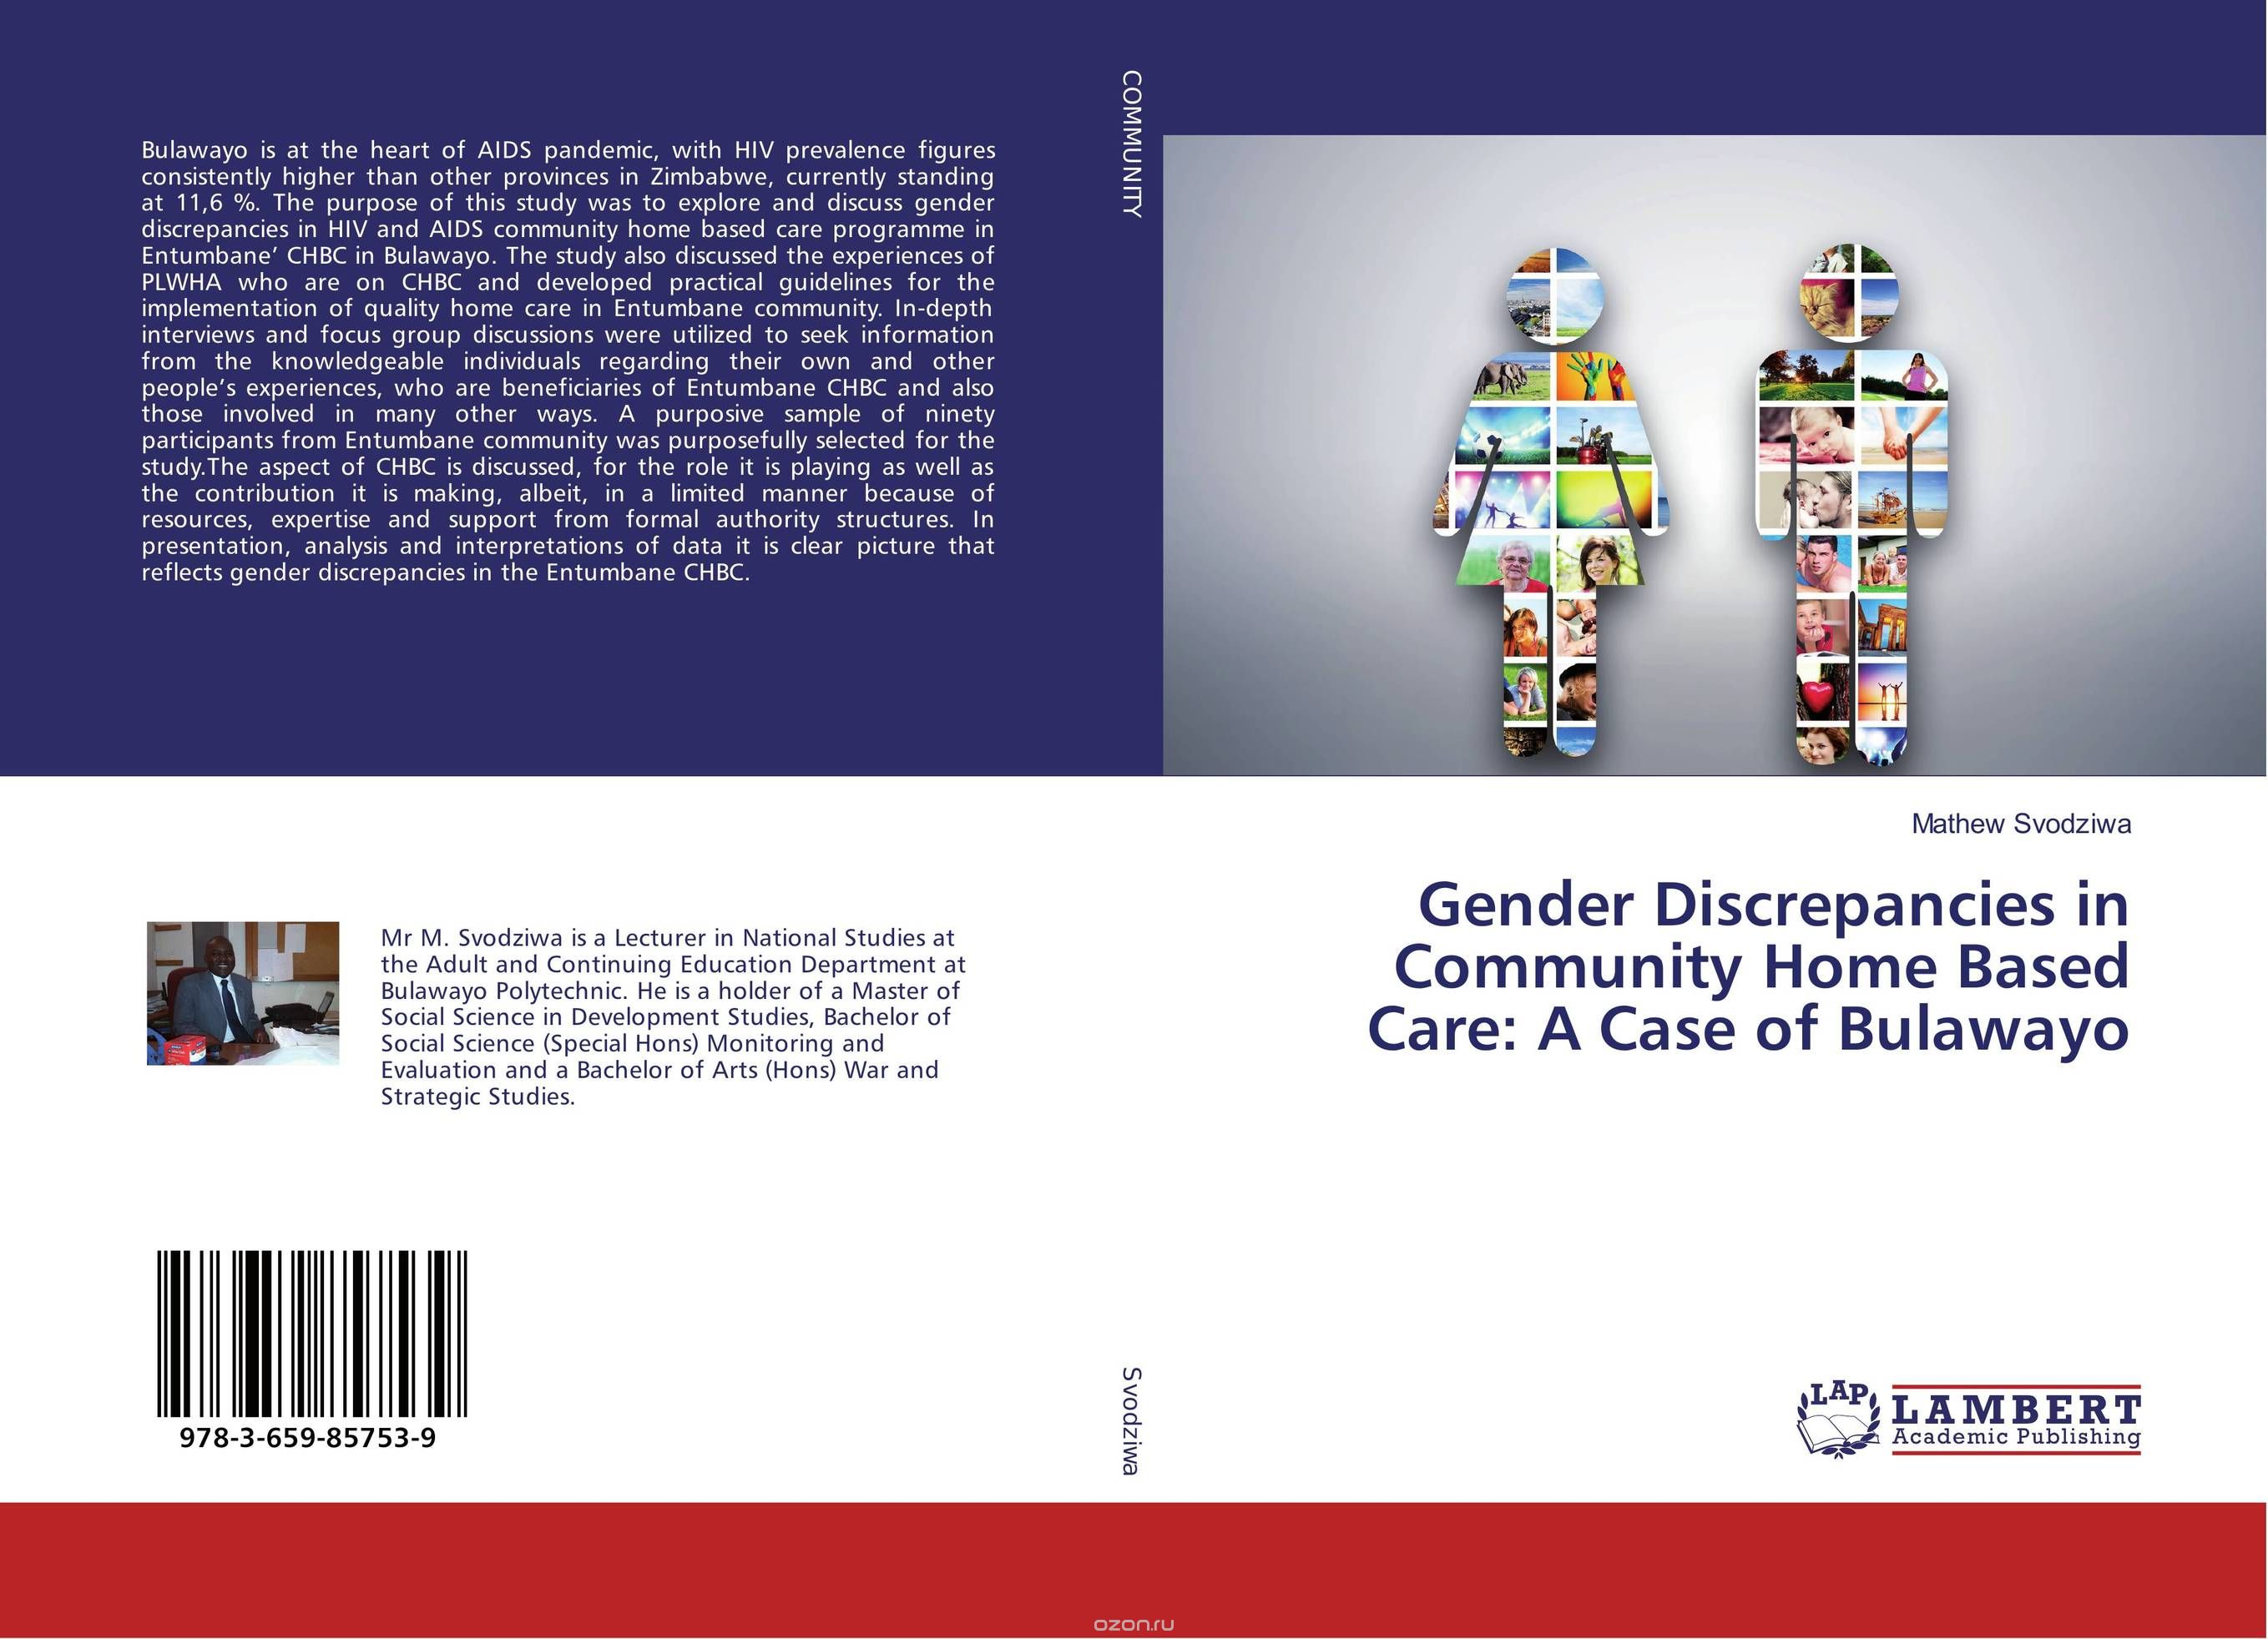 Gender Discrepancies in Community Home Based Care: A Case of Bulawayo